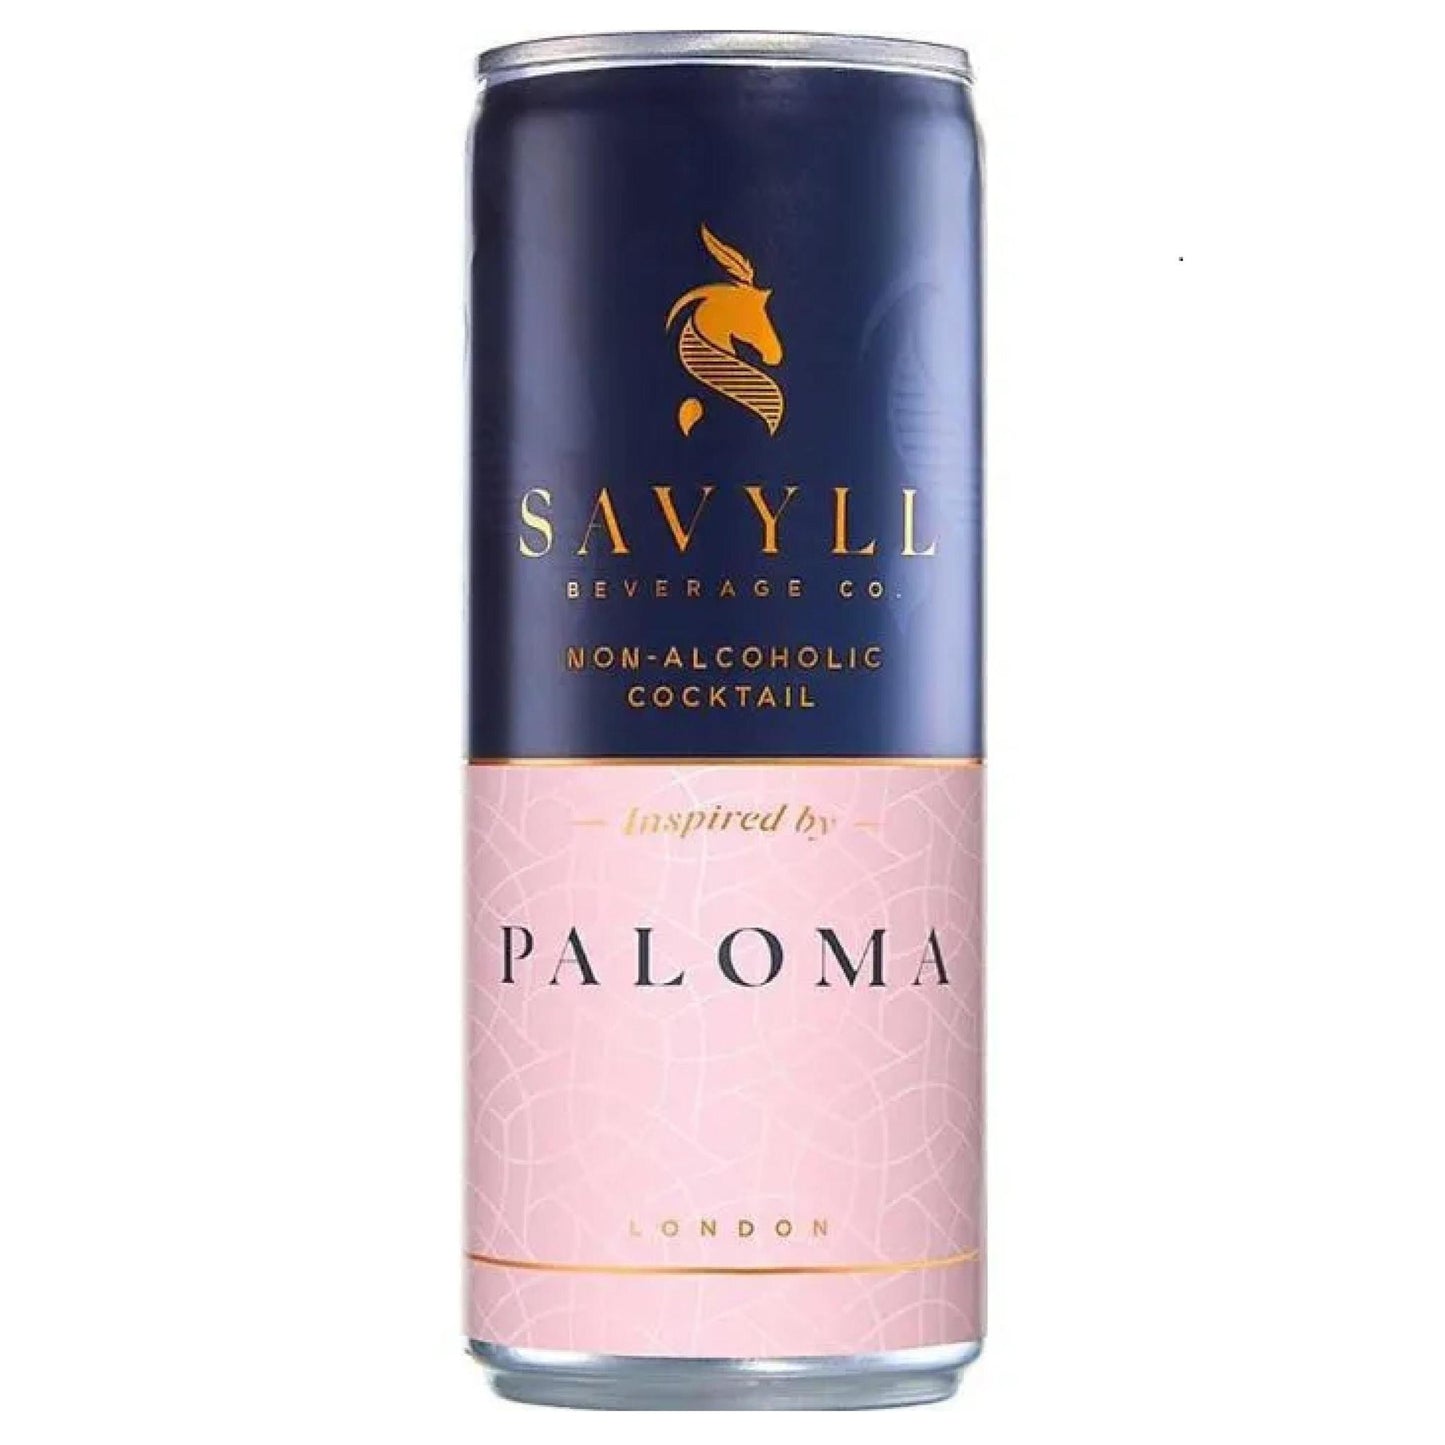 Savyll Beverage Co. - 'Paloma' Non-Alcoholic Cocktail (8.5OZ) - The Epicurean Trader